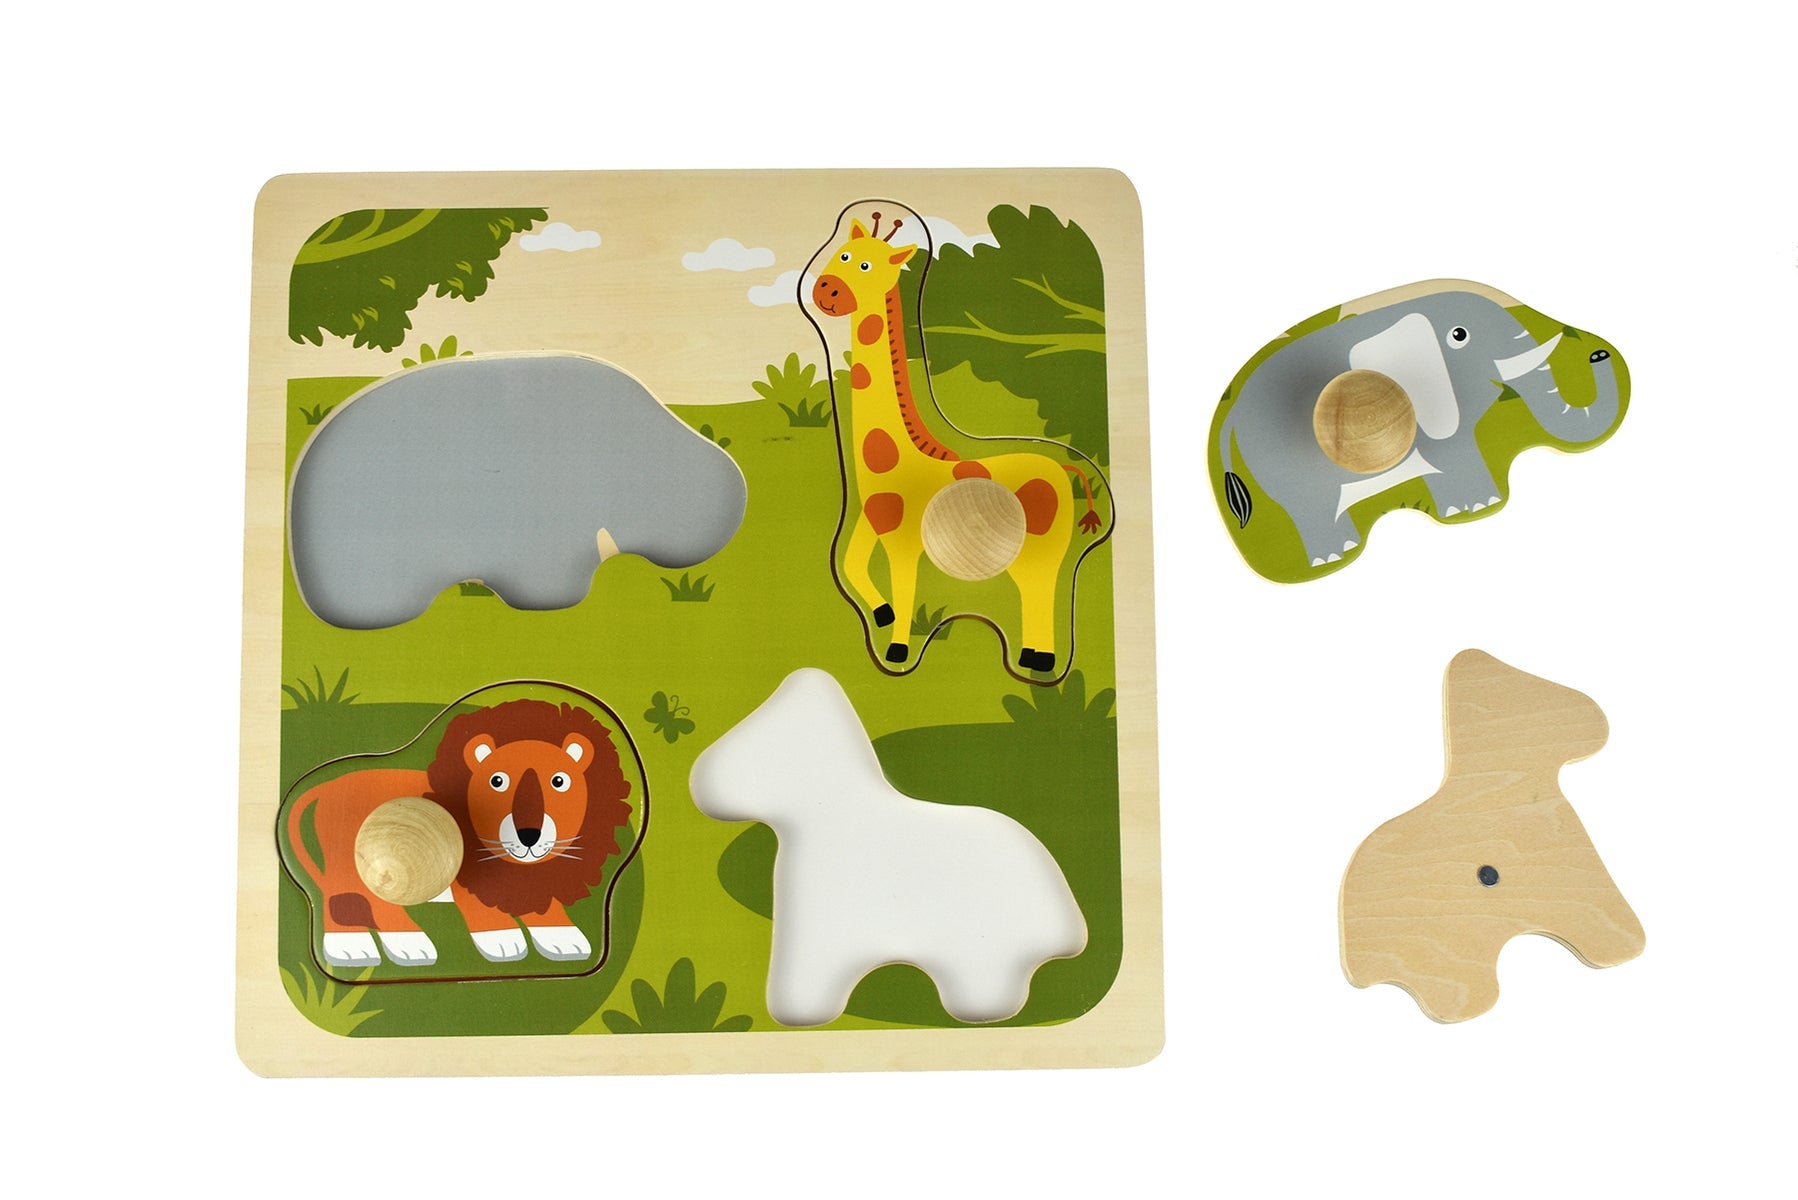 Safari Animal Large Peg Puzzle